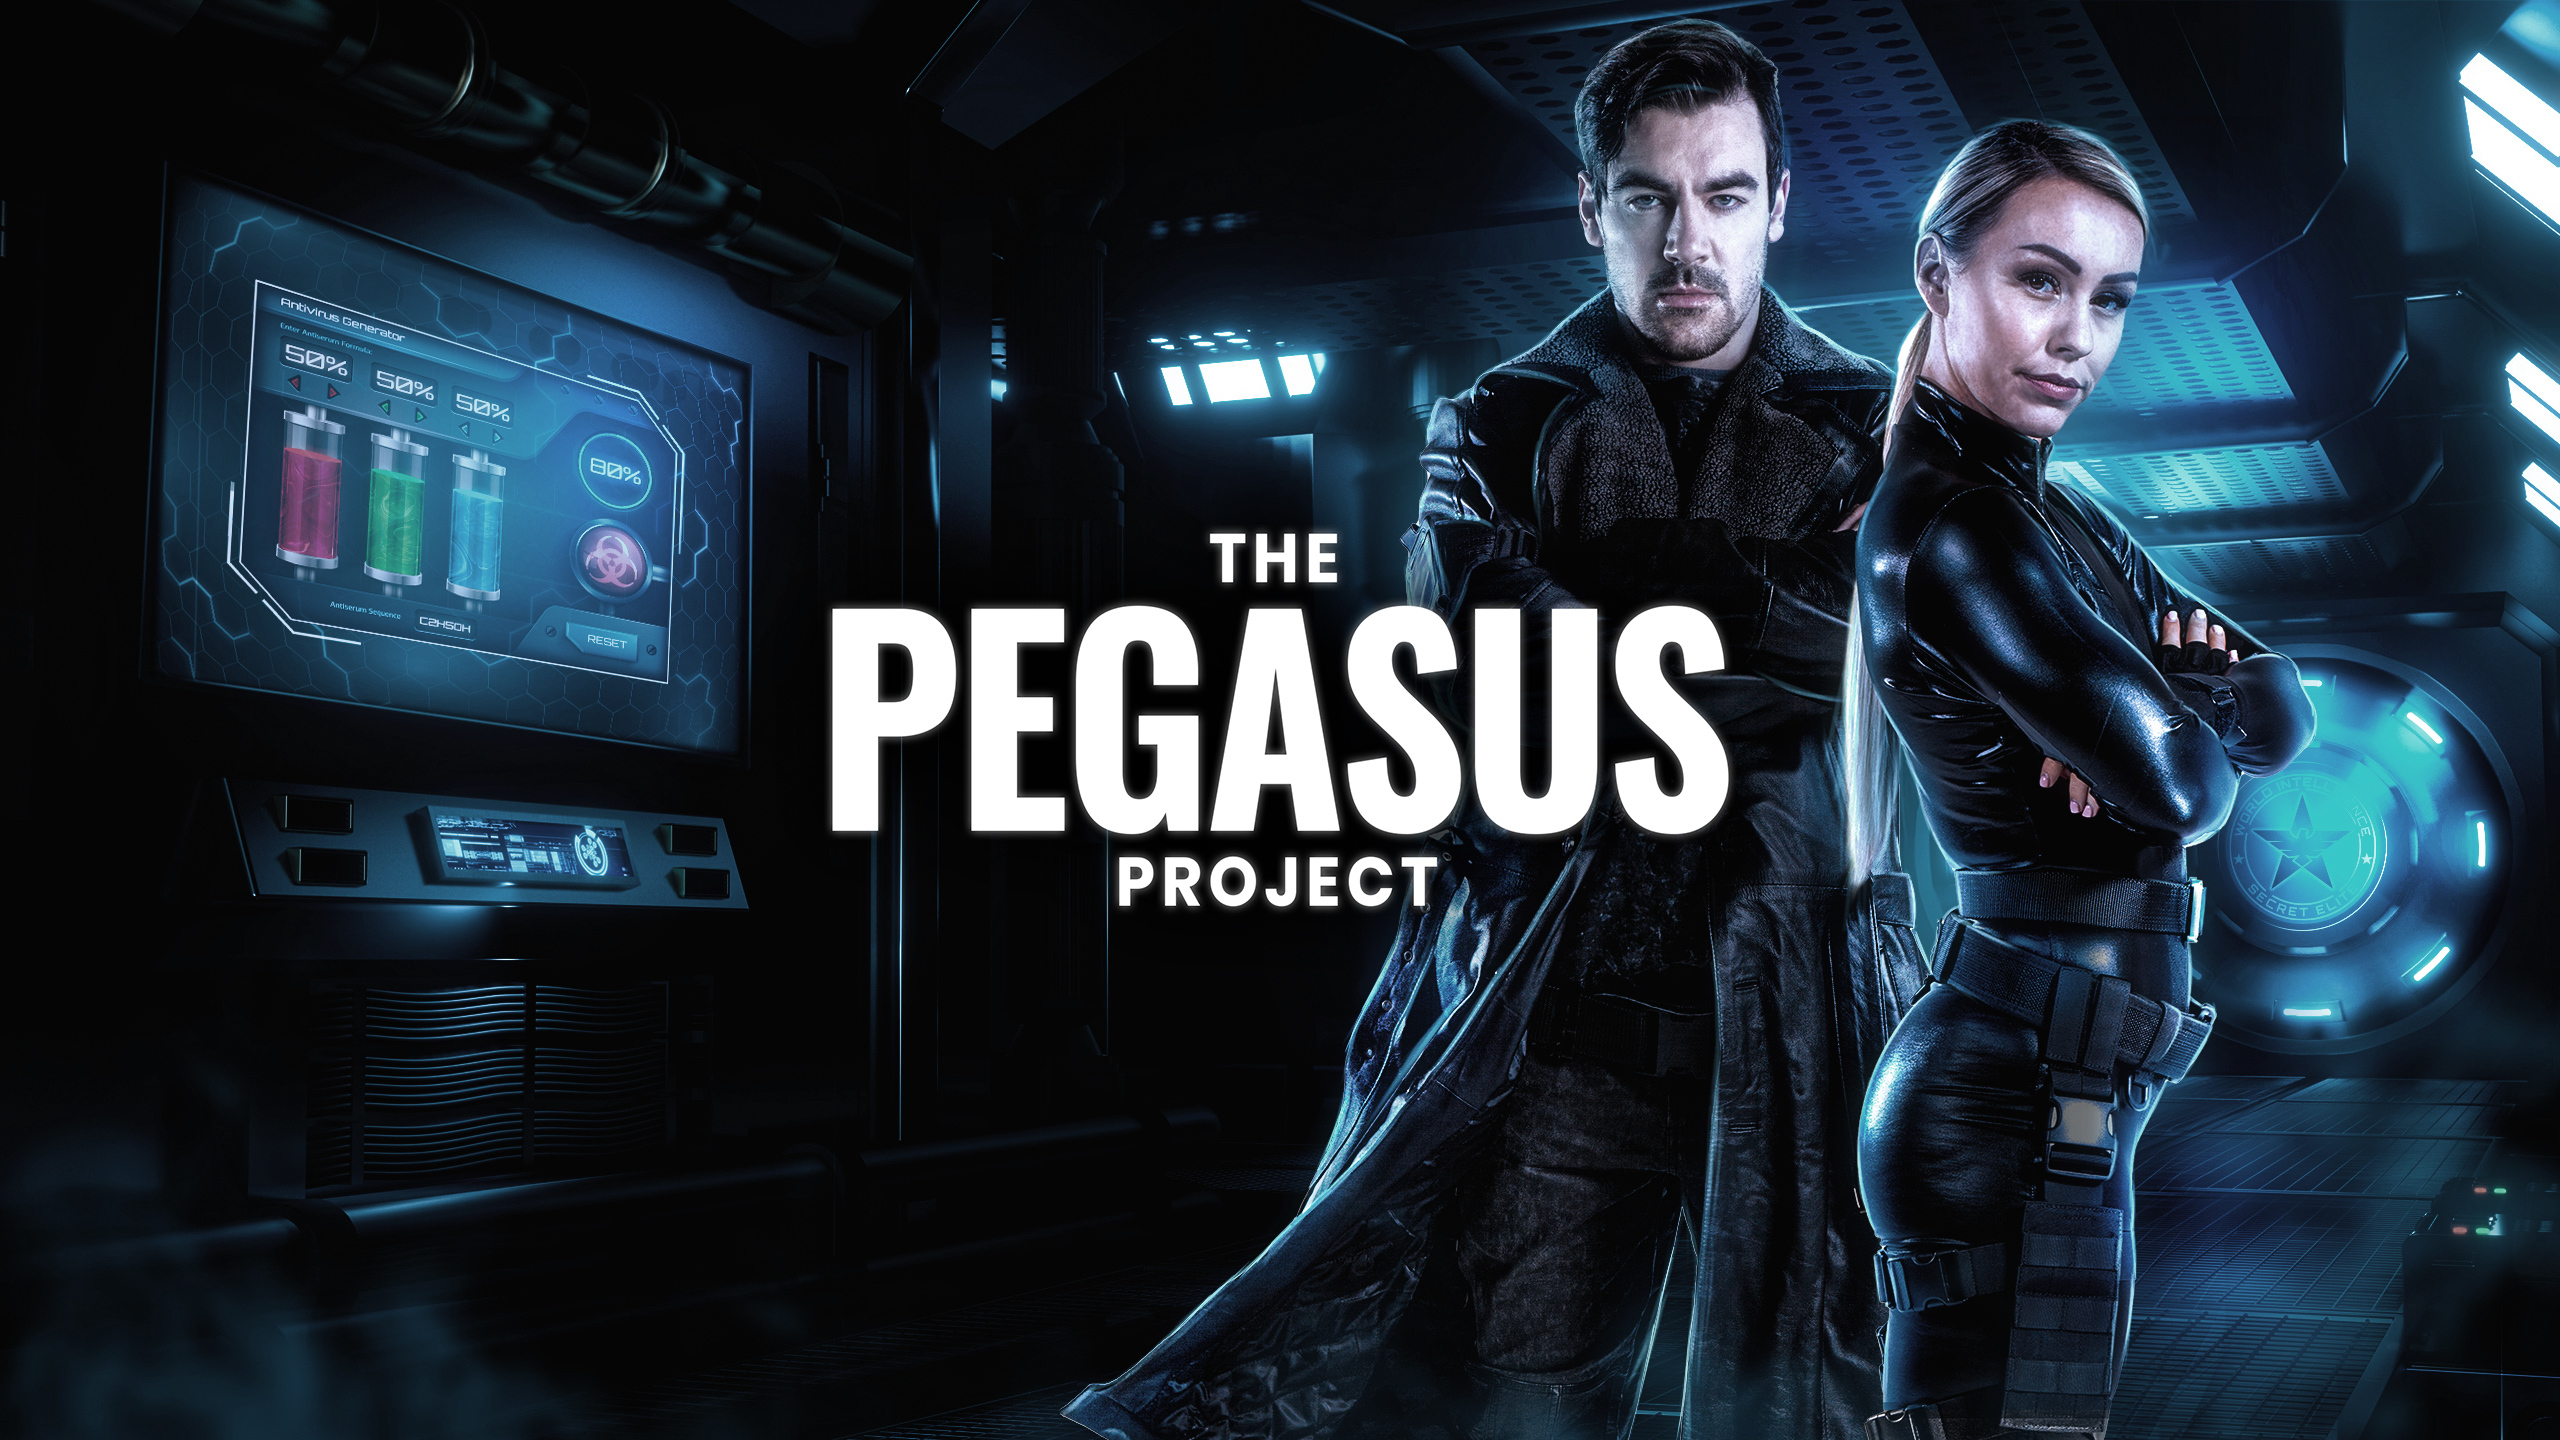 Teamuitje Amersfoort: Online escape game The Pegasus